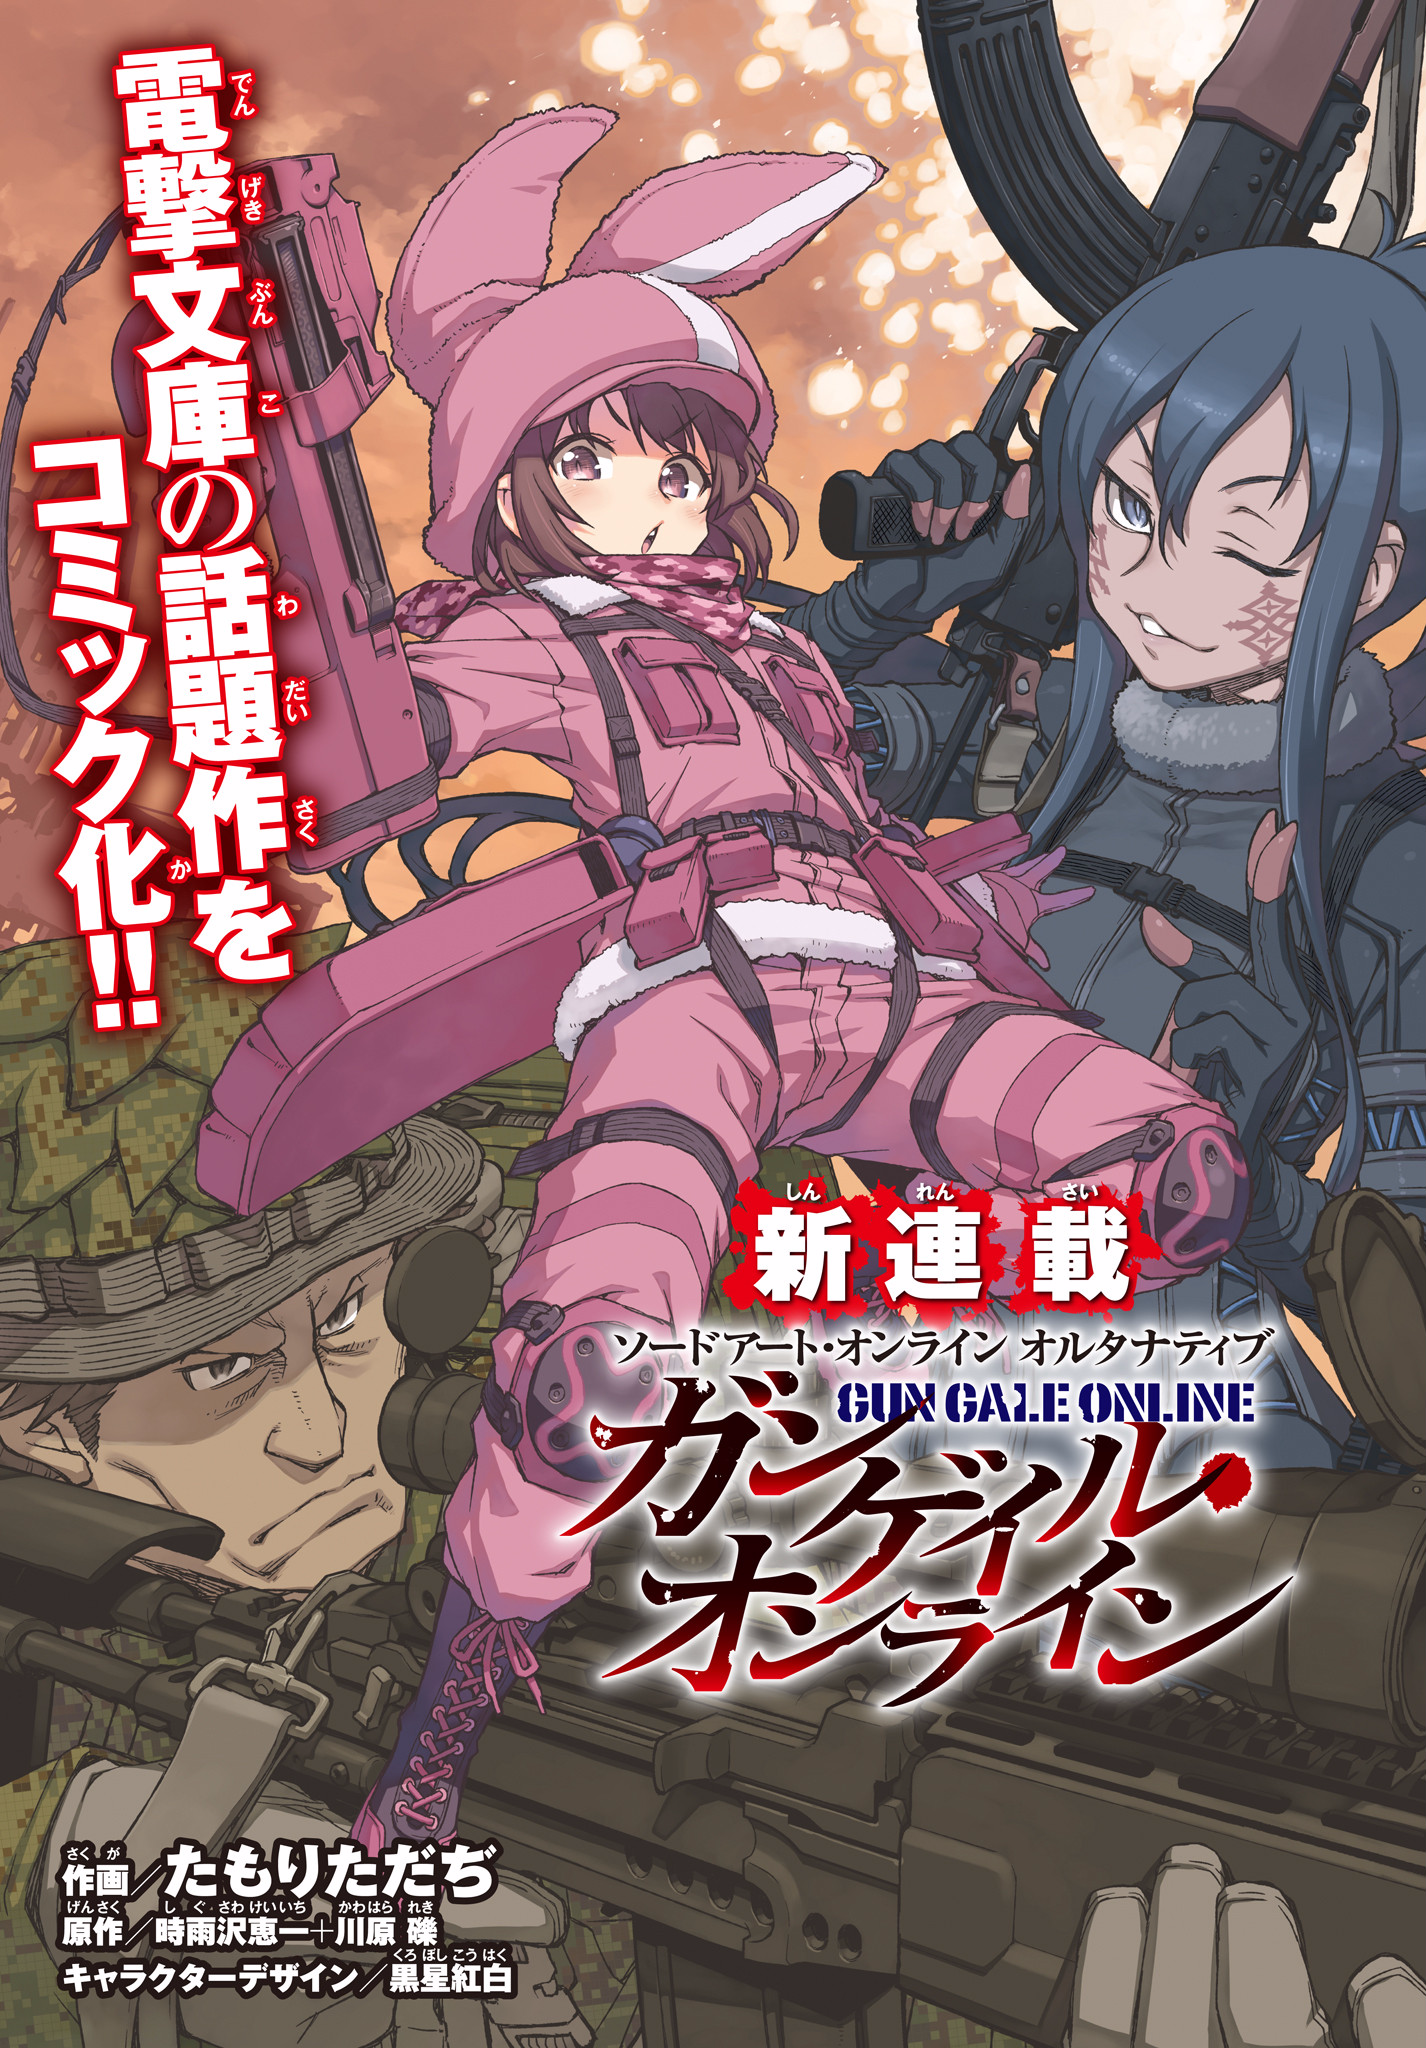 Sword Art Online Alternative Gun Gale Online Anime Gets 2nd Season - News -  Anime News Network